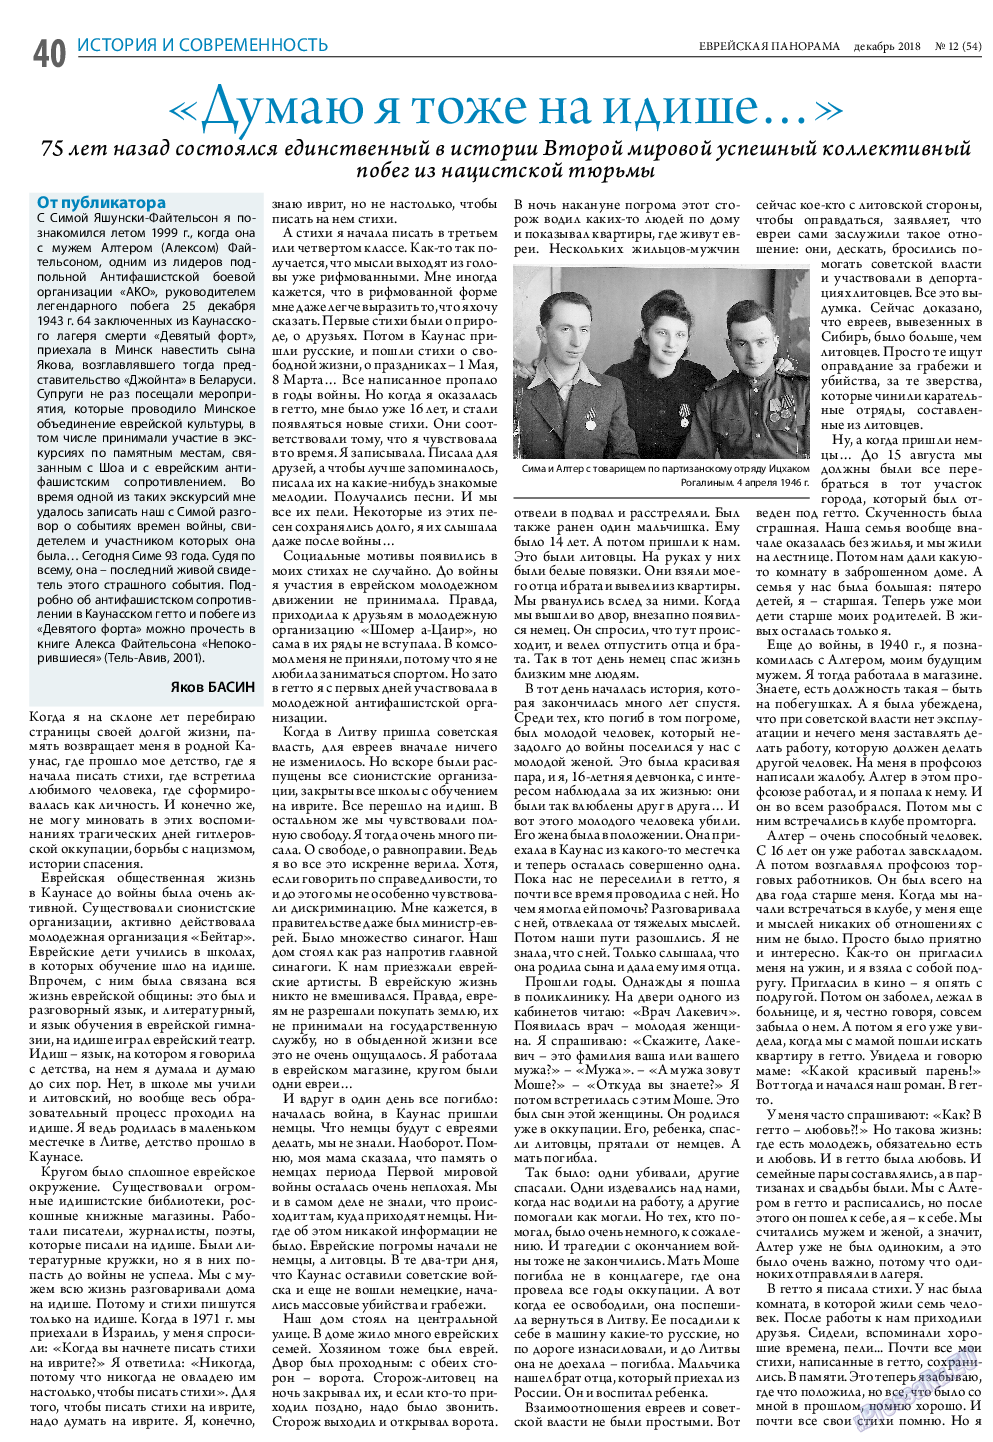 Еврейская панорама, газета. 2018 №12 стр.40